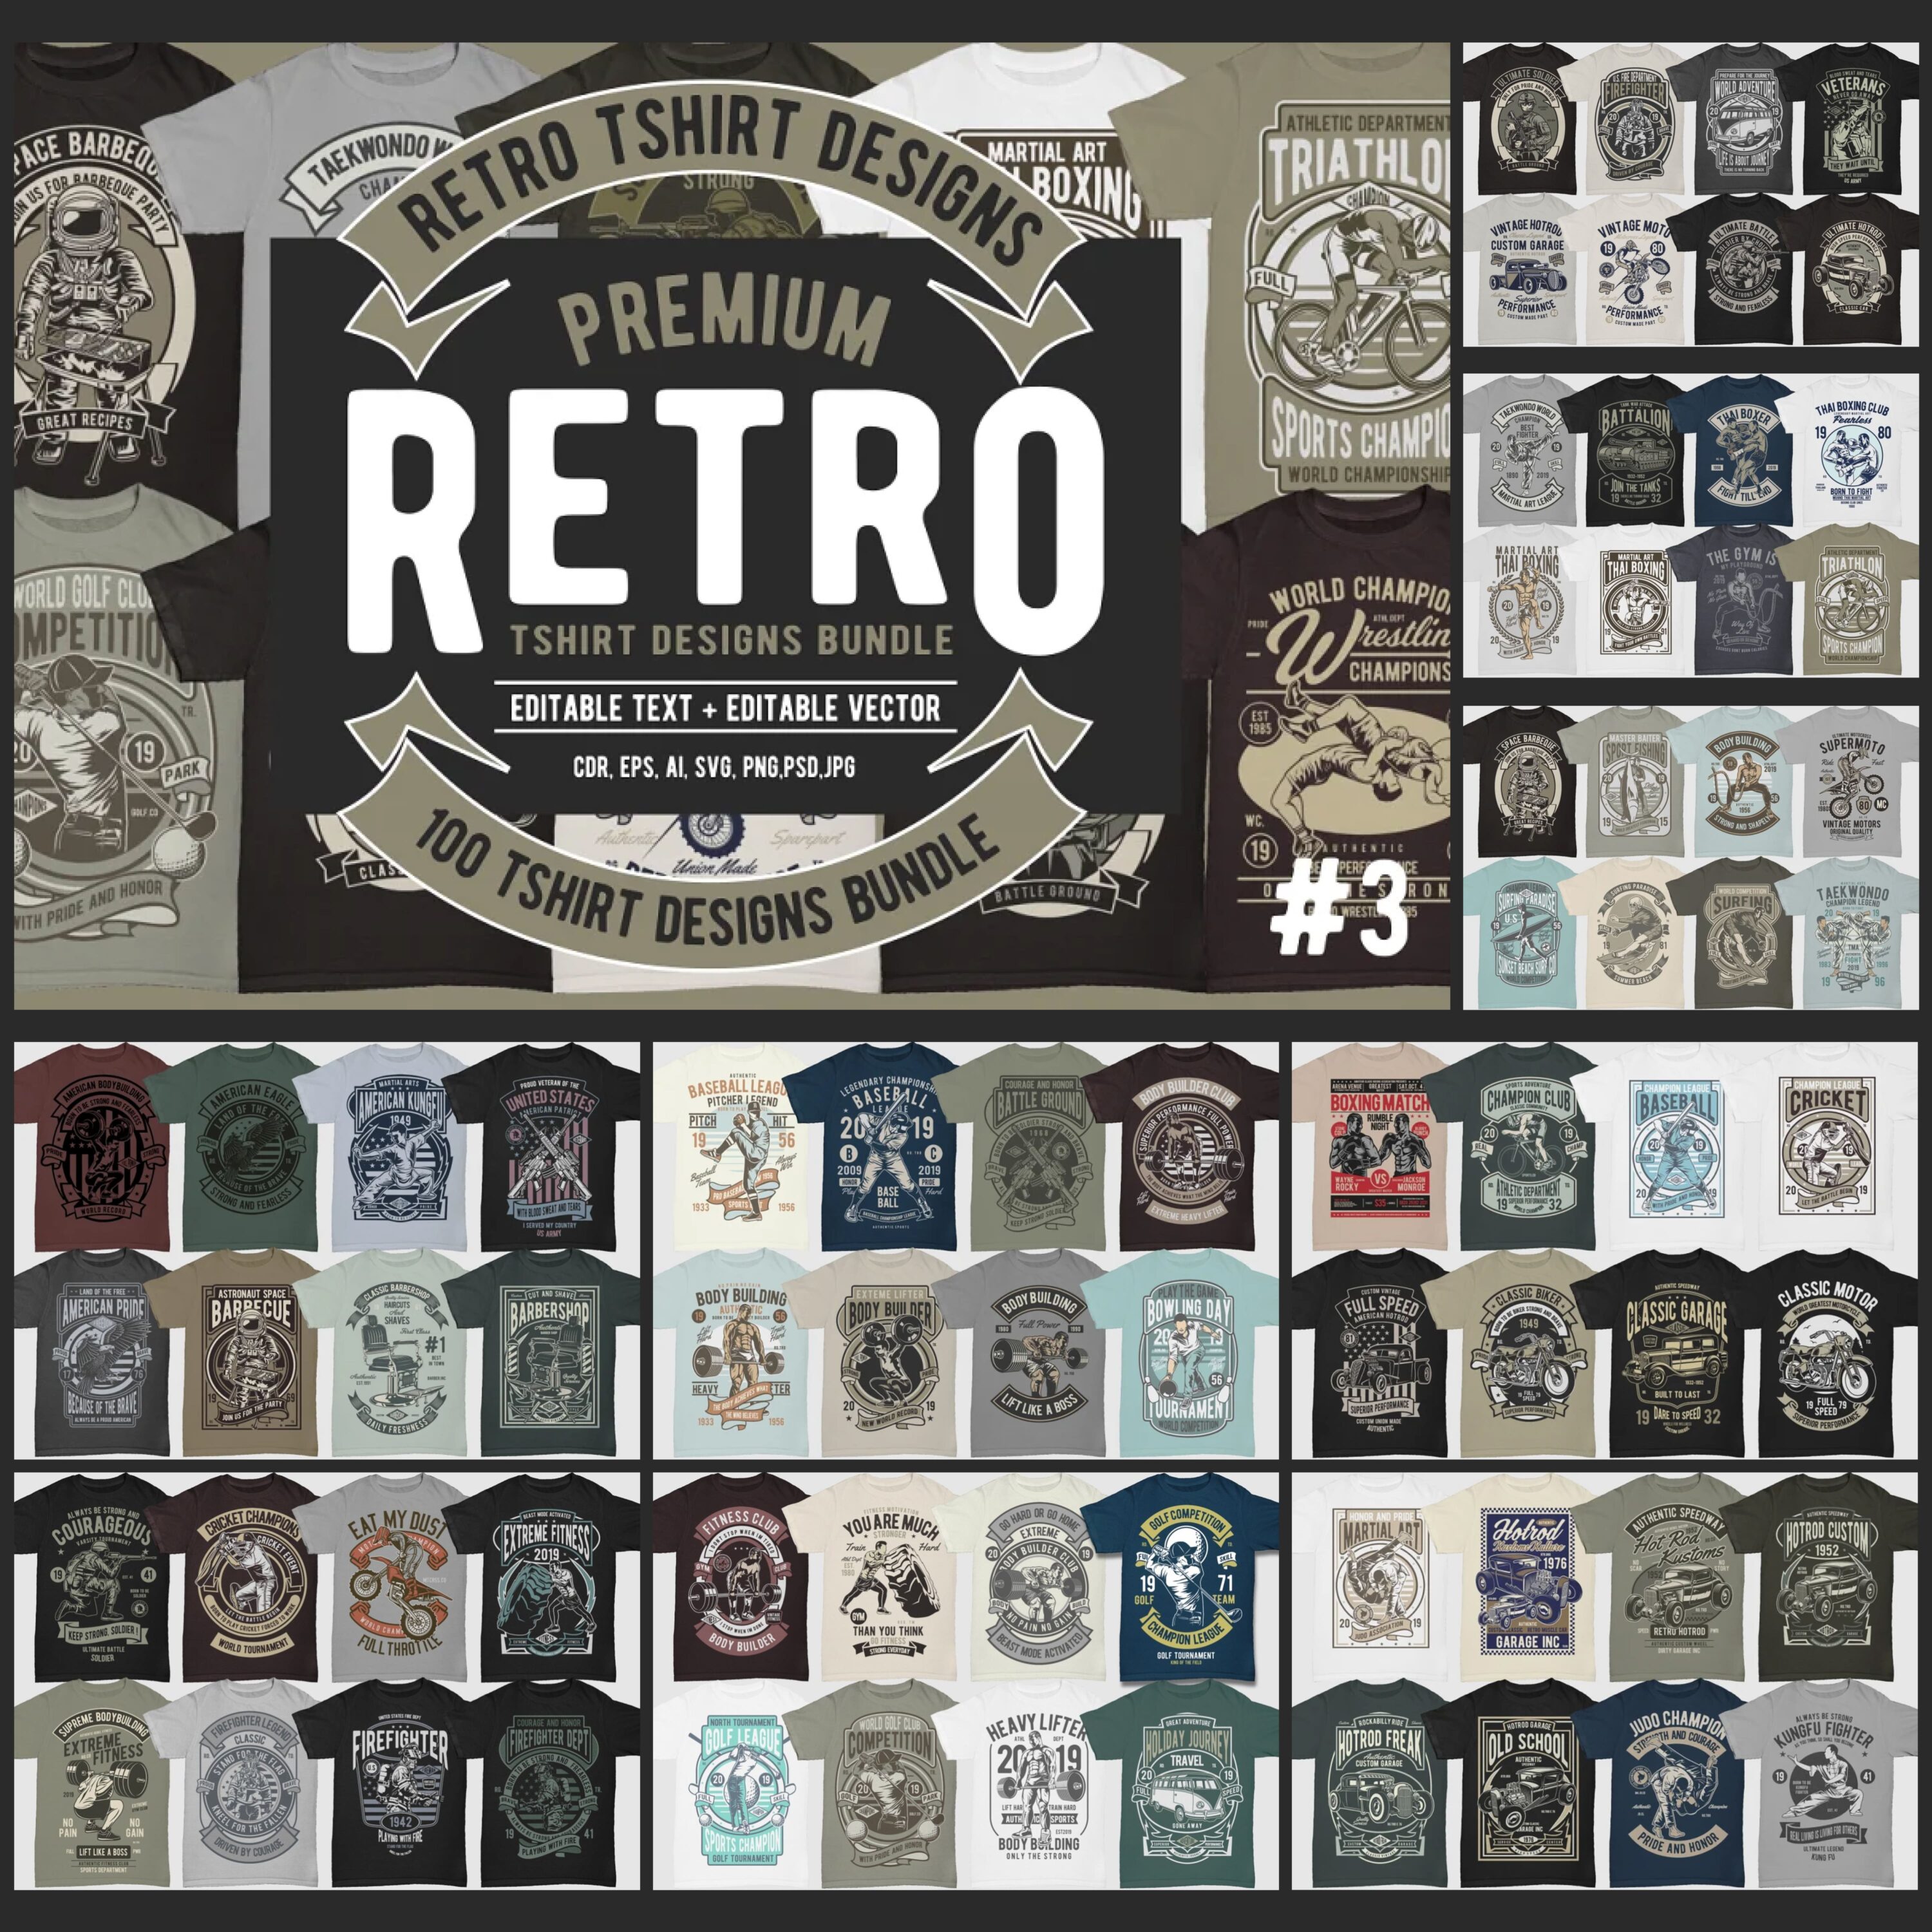 100 Retro Tshirt Designs Bundle 3 cover image.